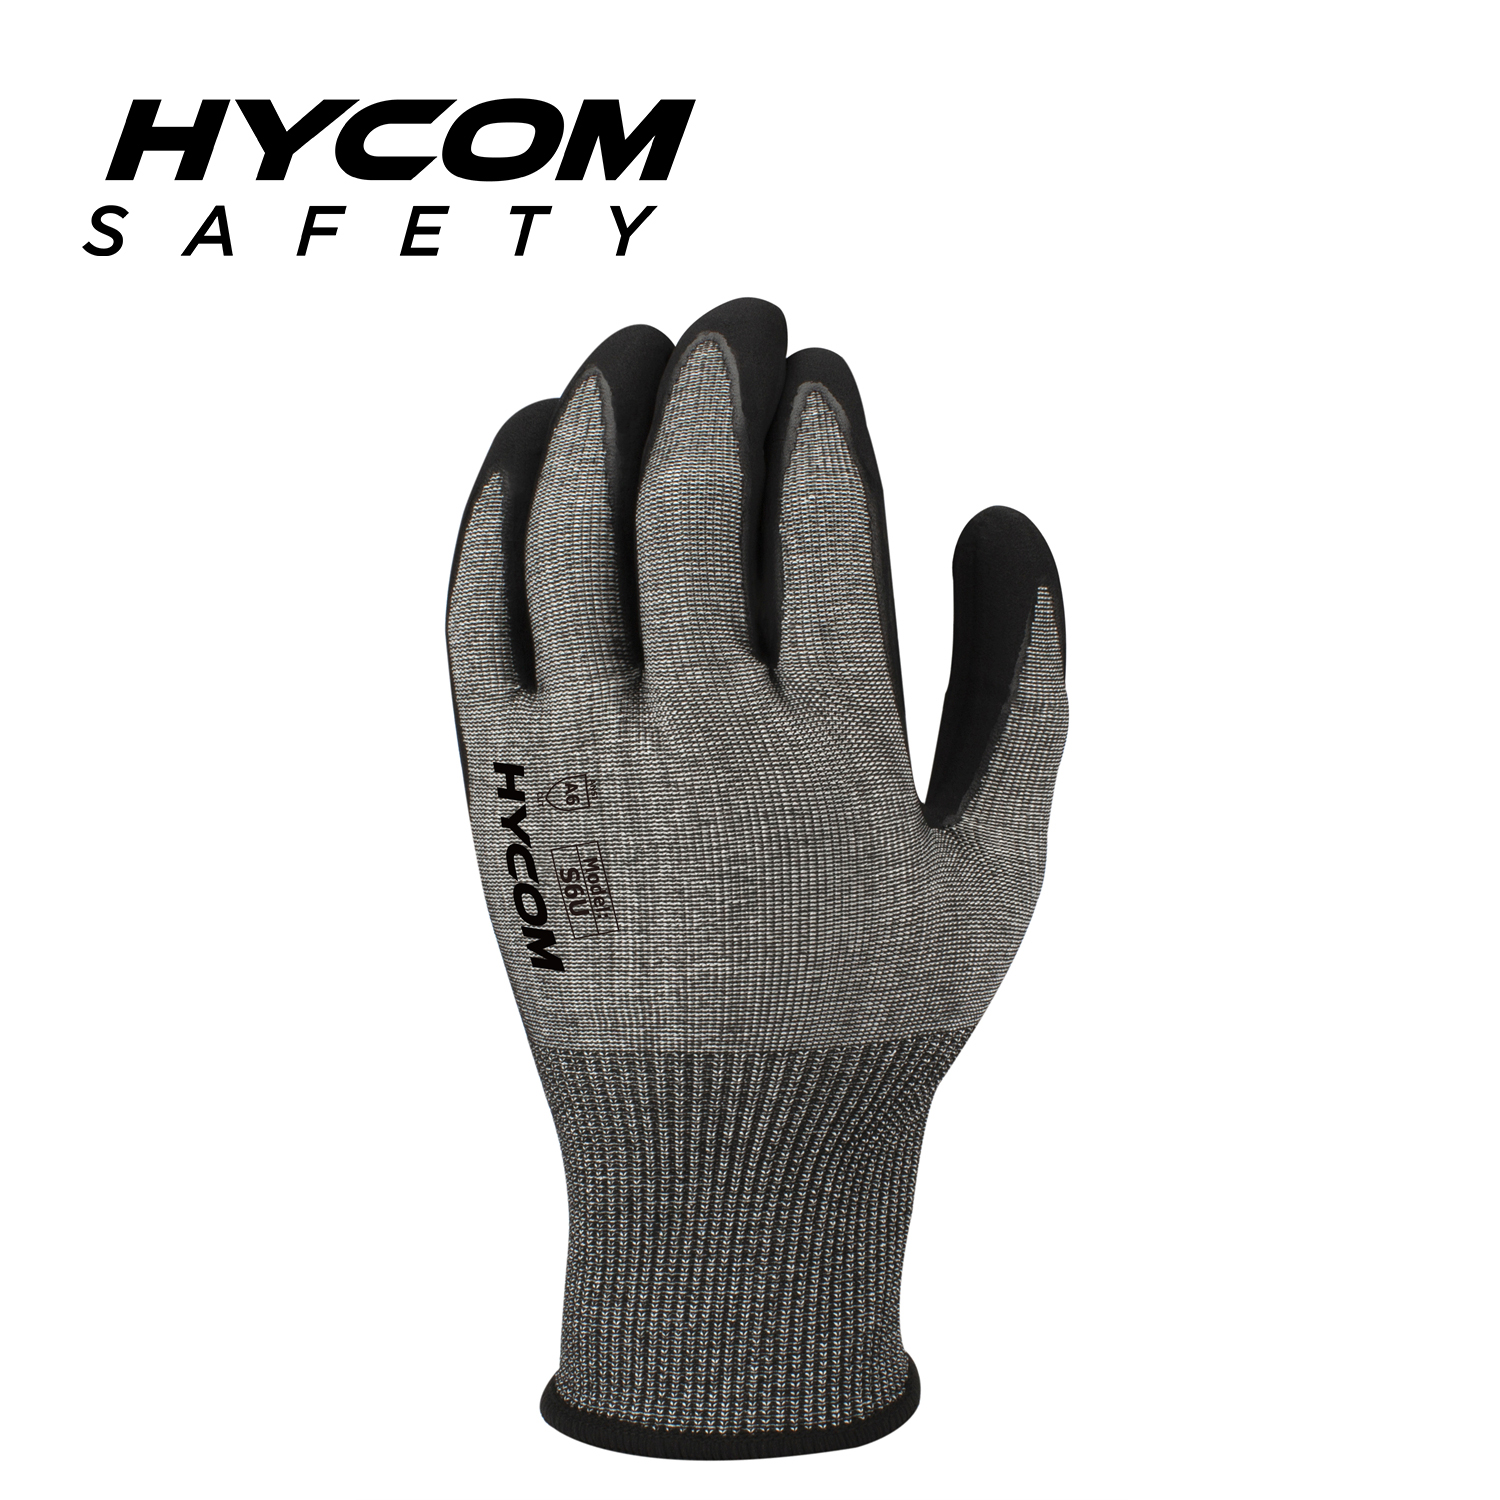 HYCOM 18G ANSI 6 Schnittfester Handschuh mit Handflächenschaum-Nitril-Beschichtung. PSA-Handschuhe